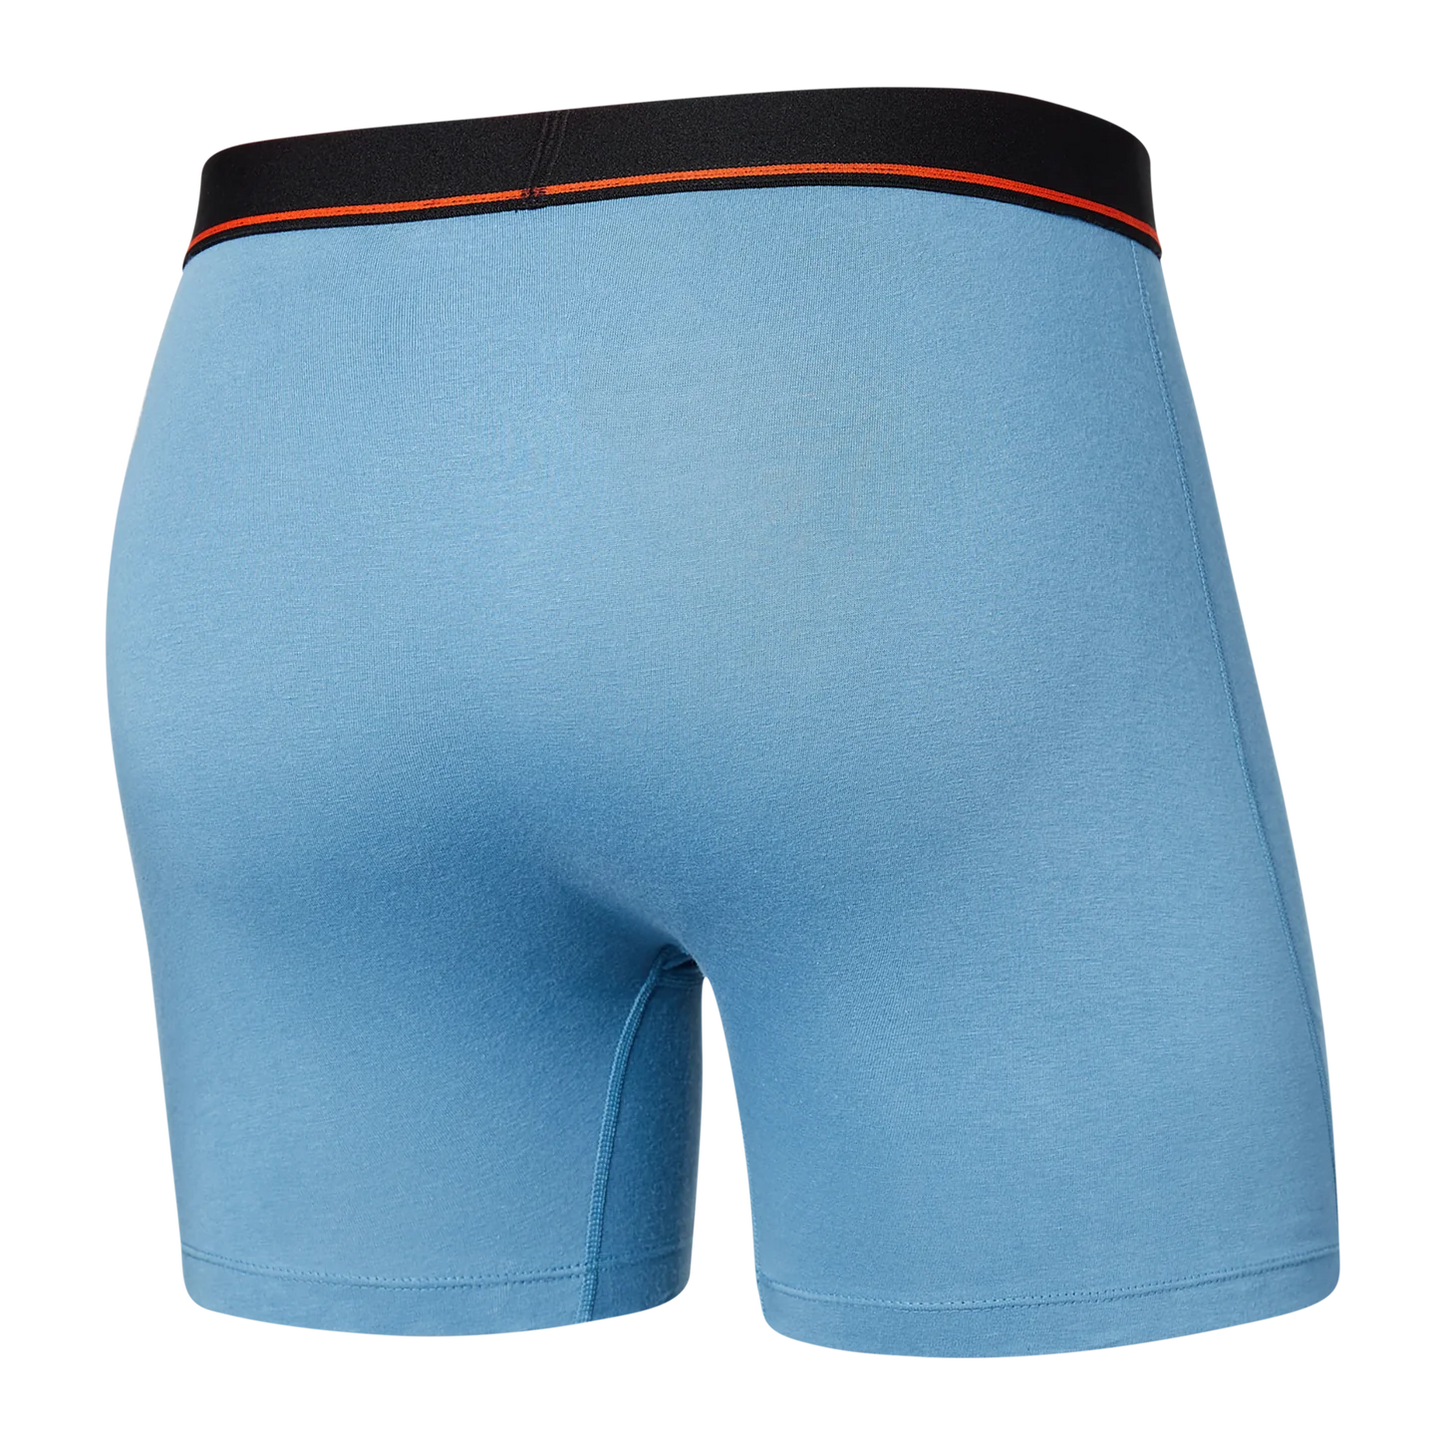 SAXX Underwear Non-Stop Stretch Cotton Boxer Briefs